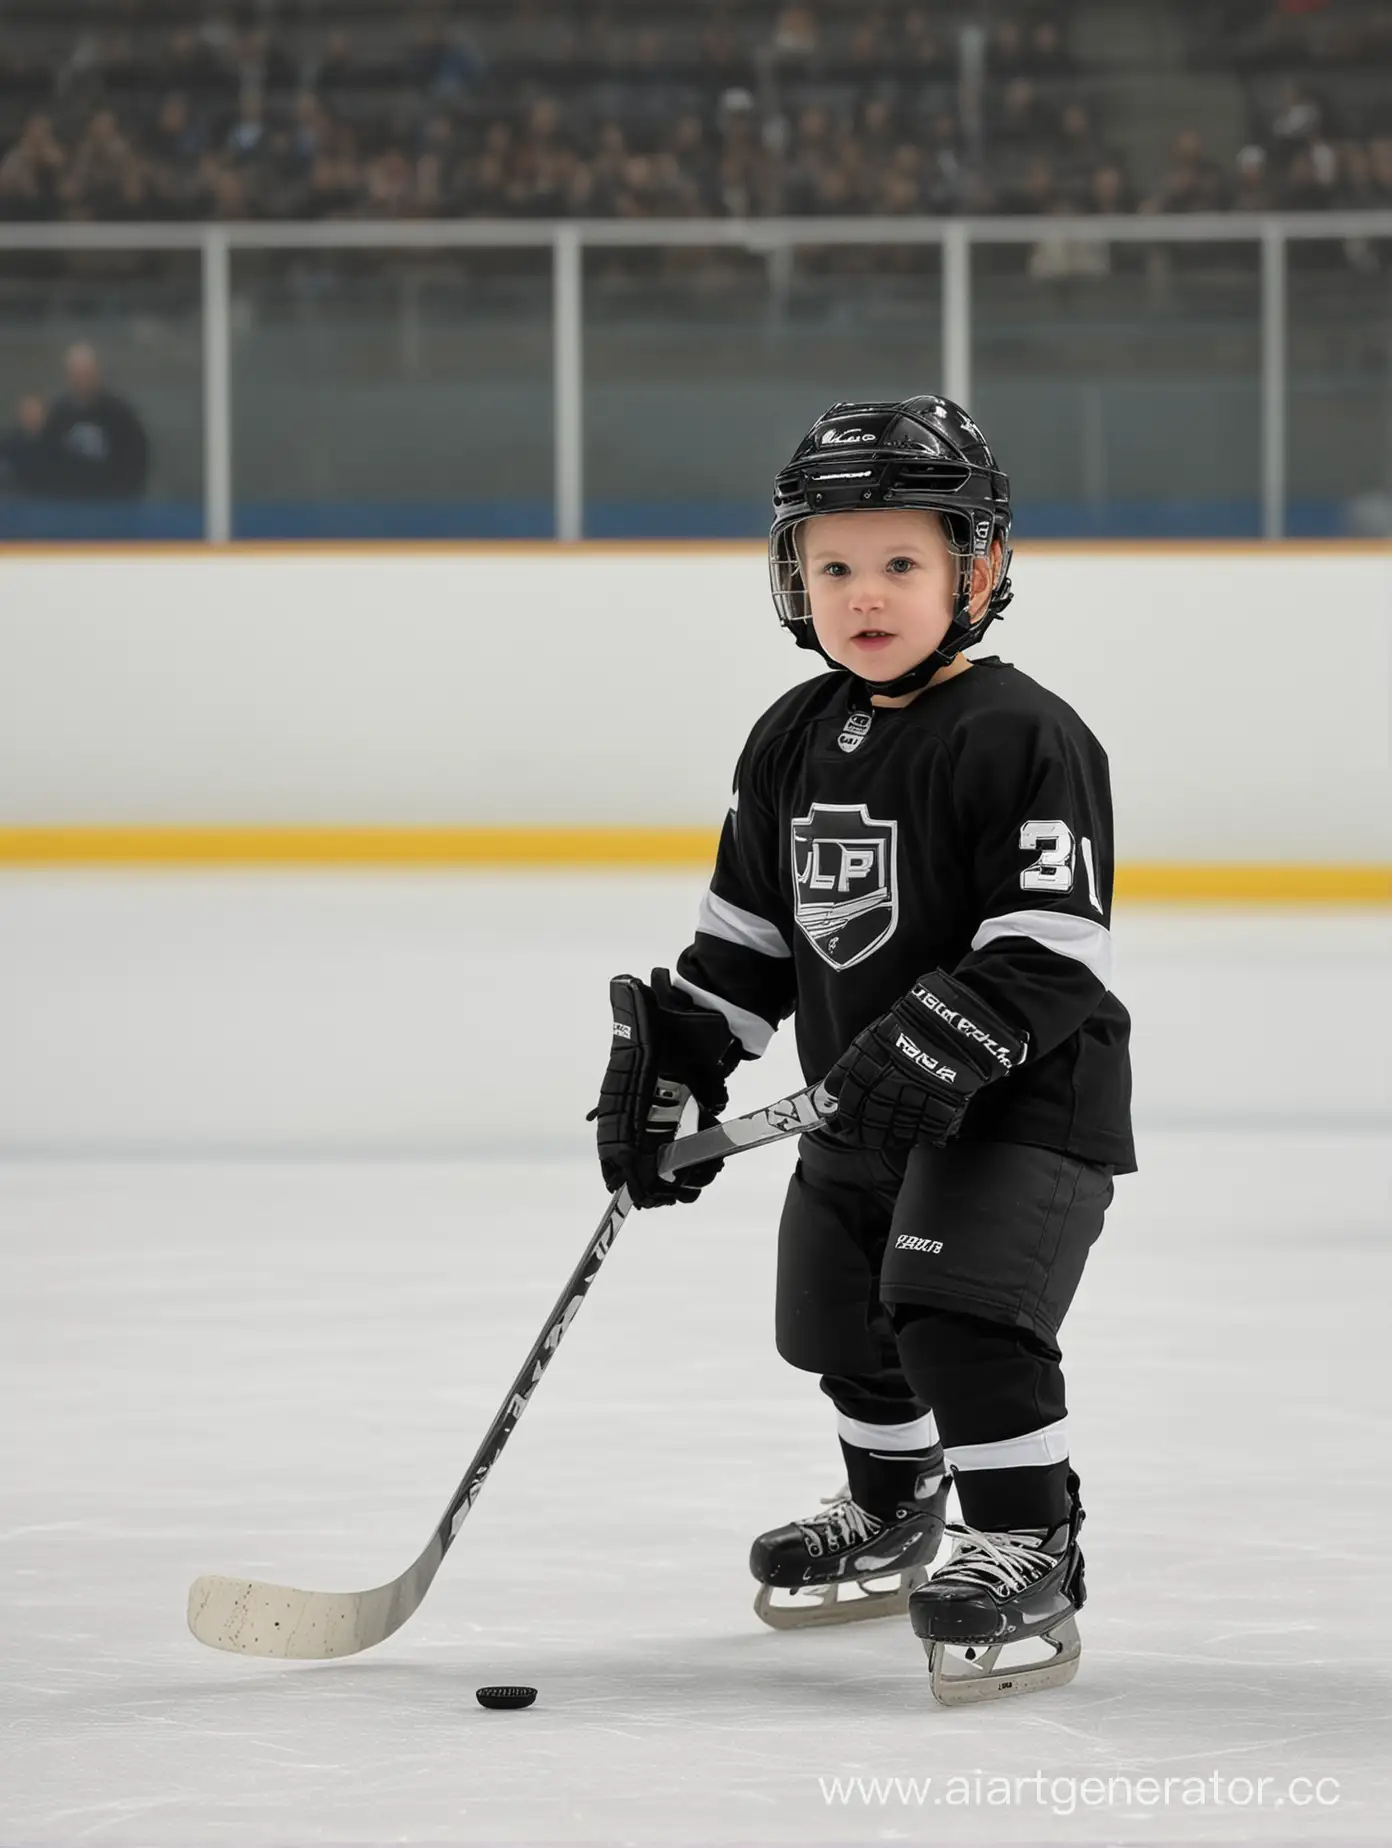 Младенец хоккеист, черная  форма , на льду арене

